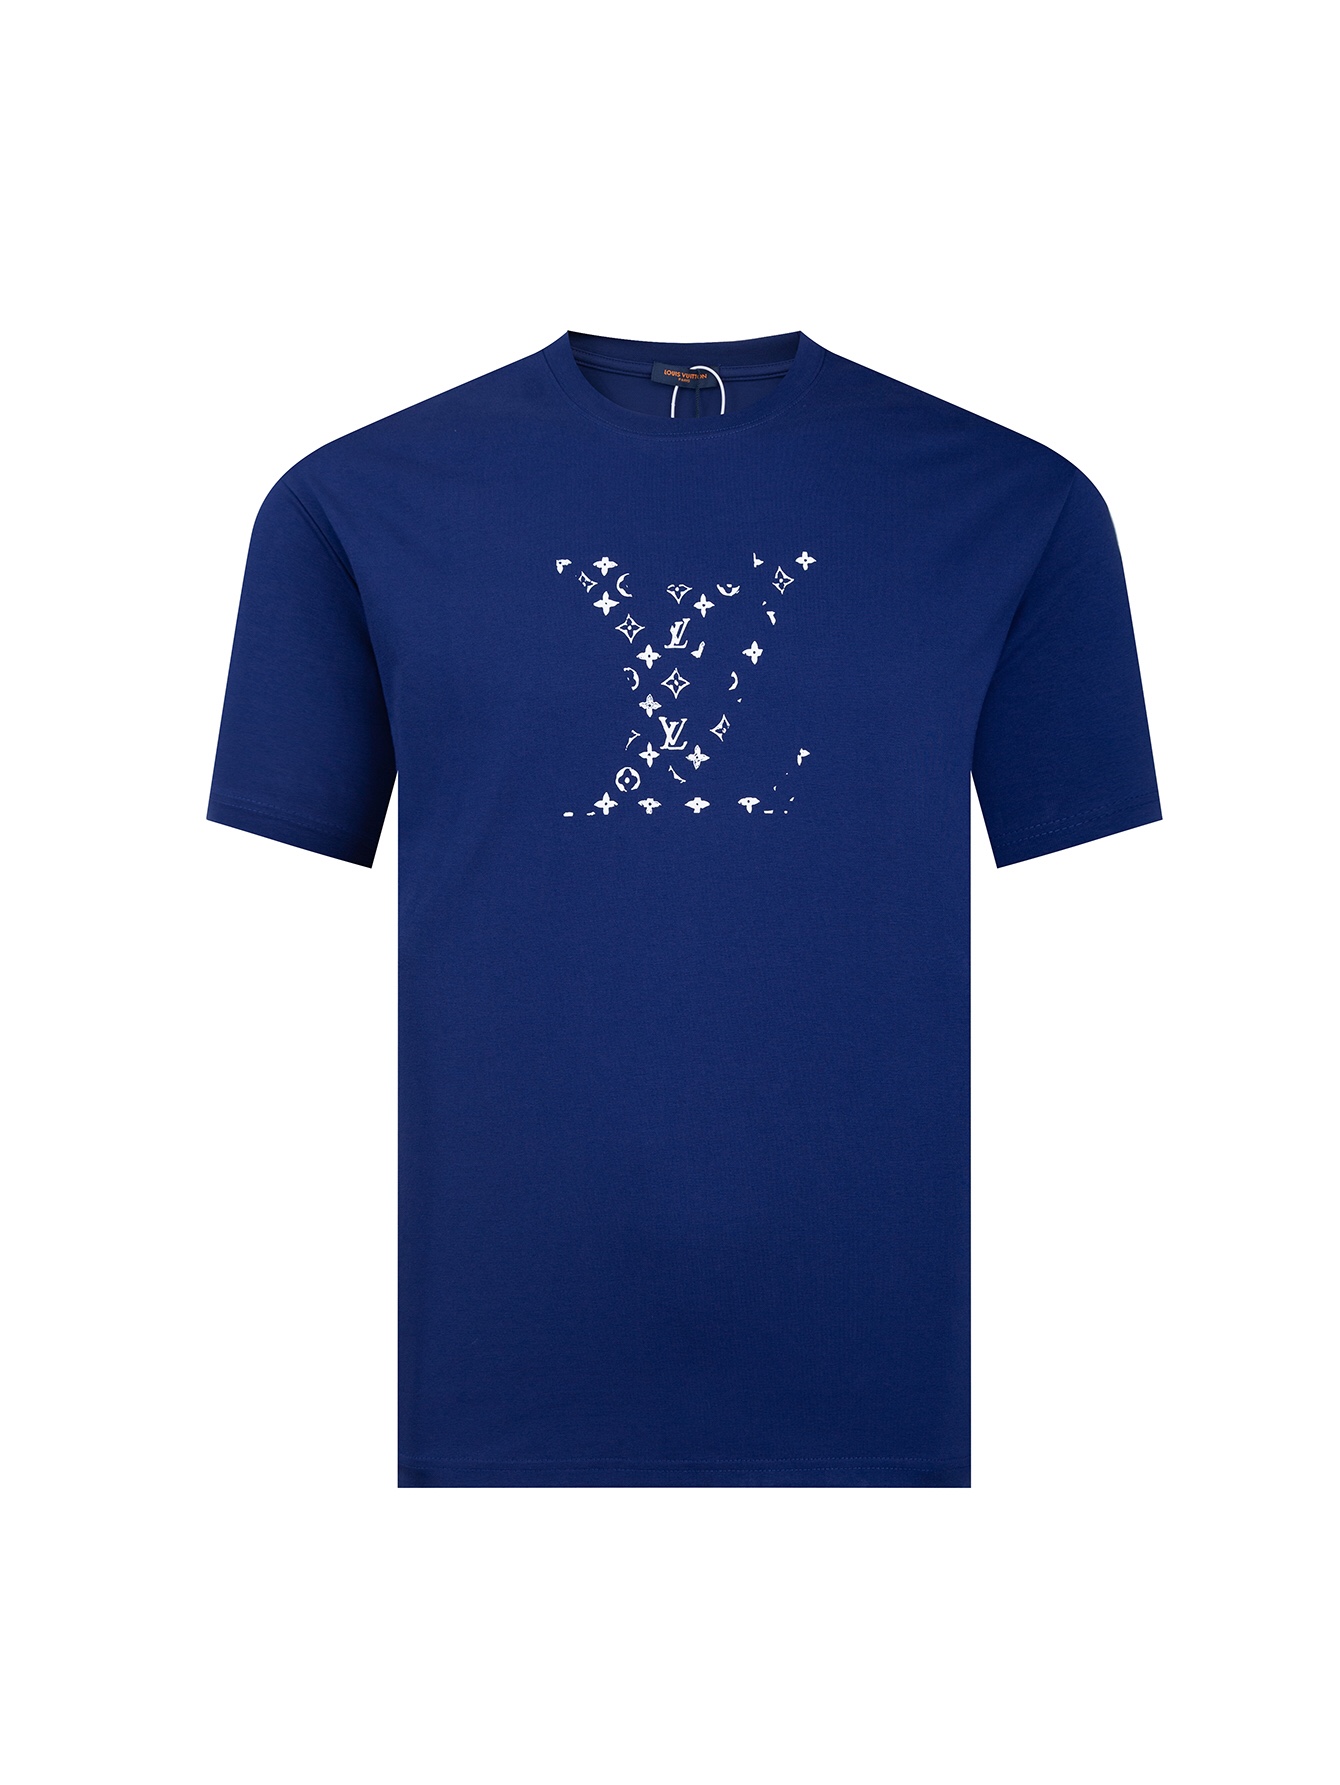 Louis Vuitton Good
 Clothing T-Shirt Black Blue Printing Unisex Short Sleeve